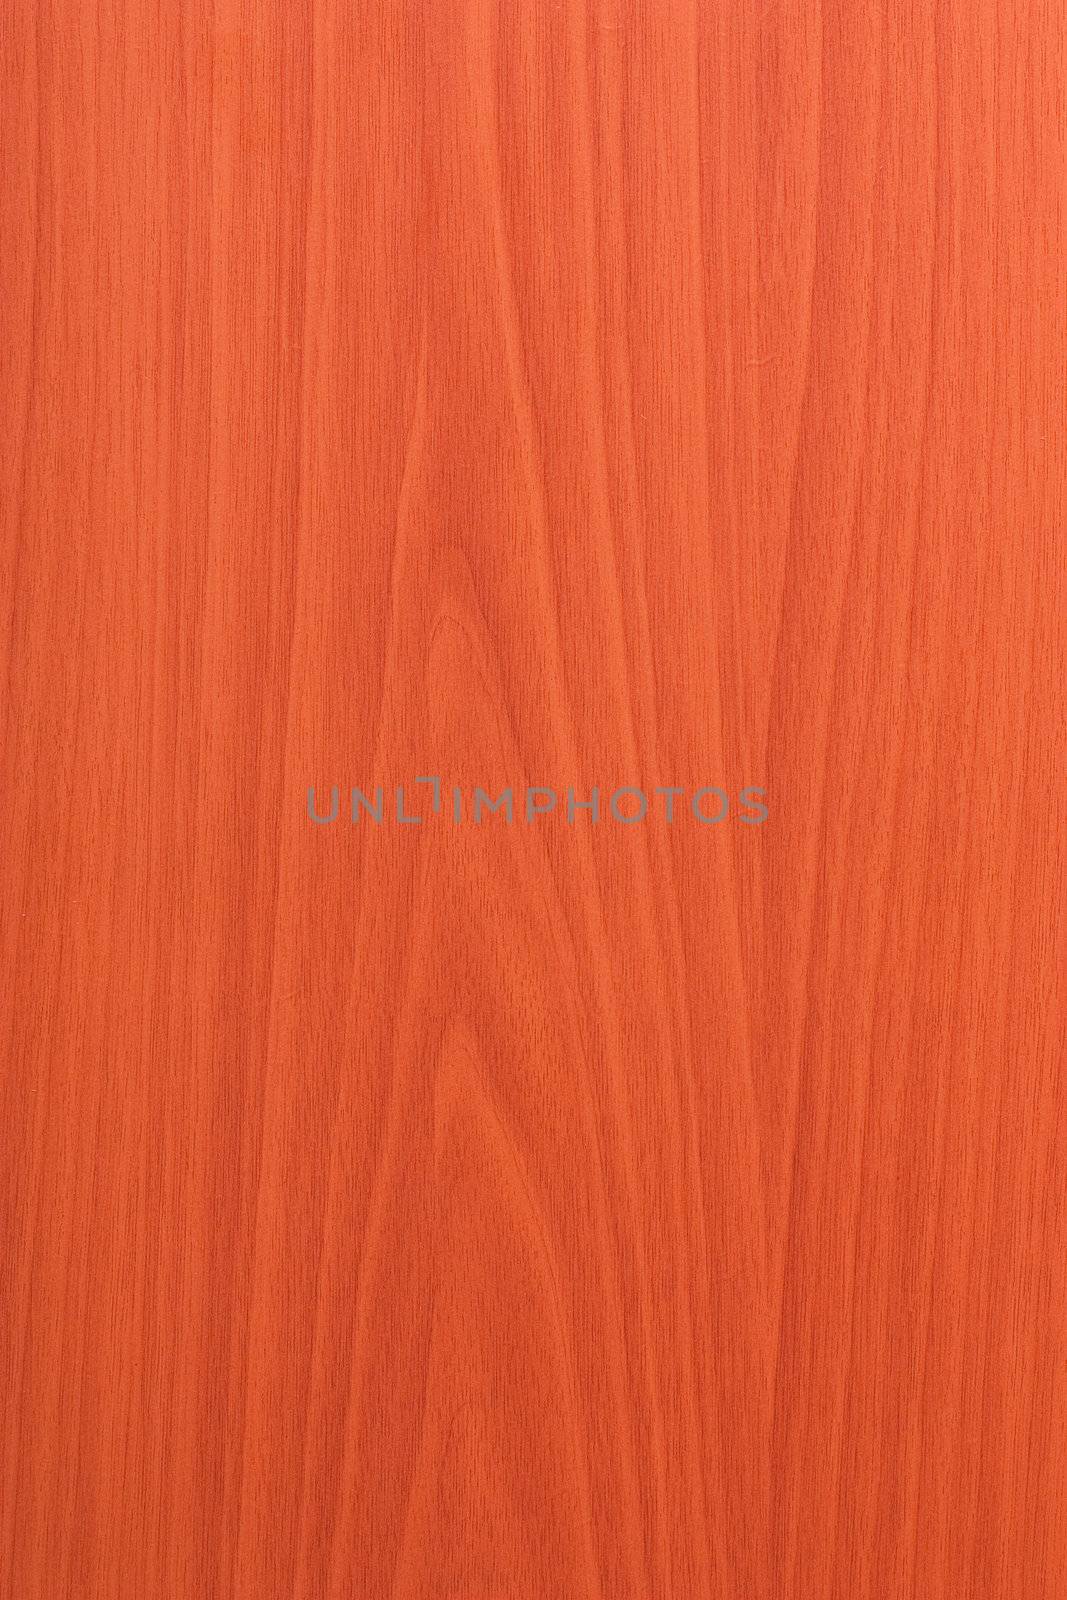 Wood grain texture. Cherry wood